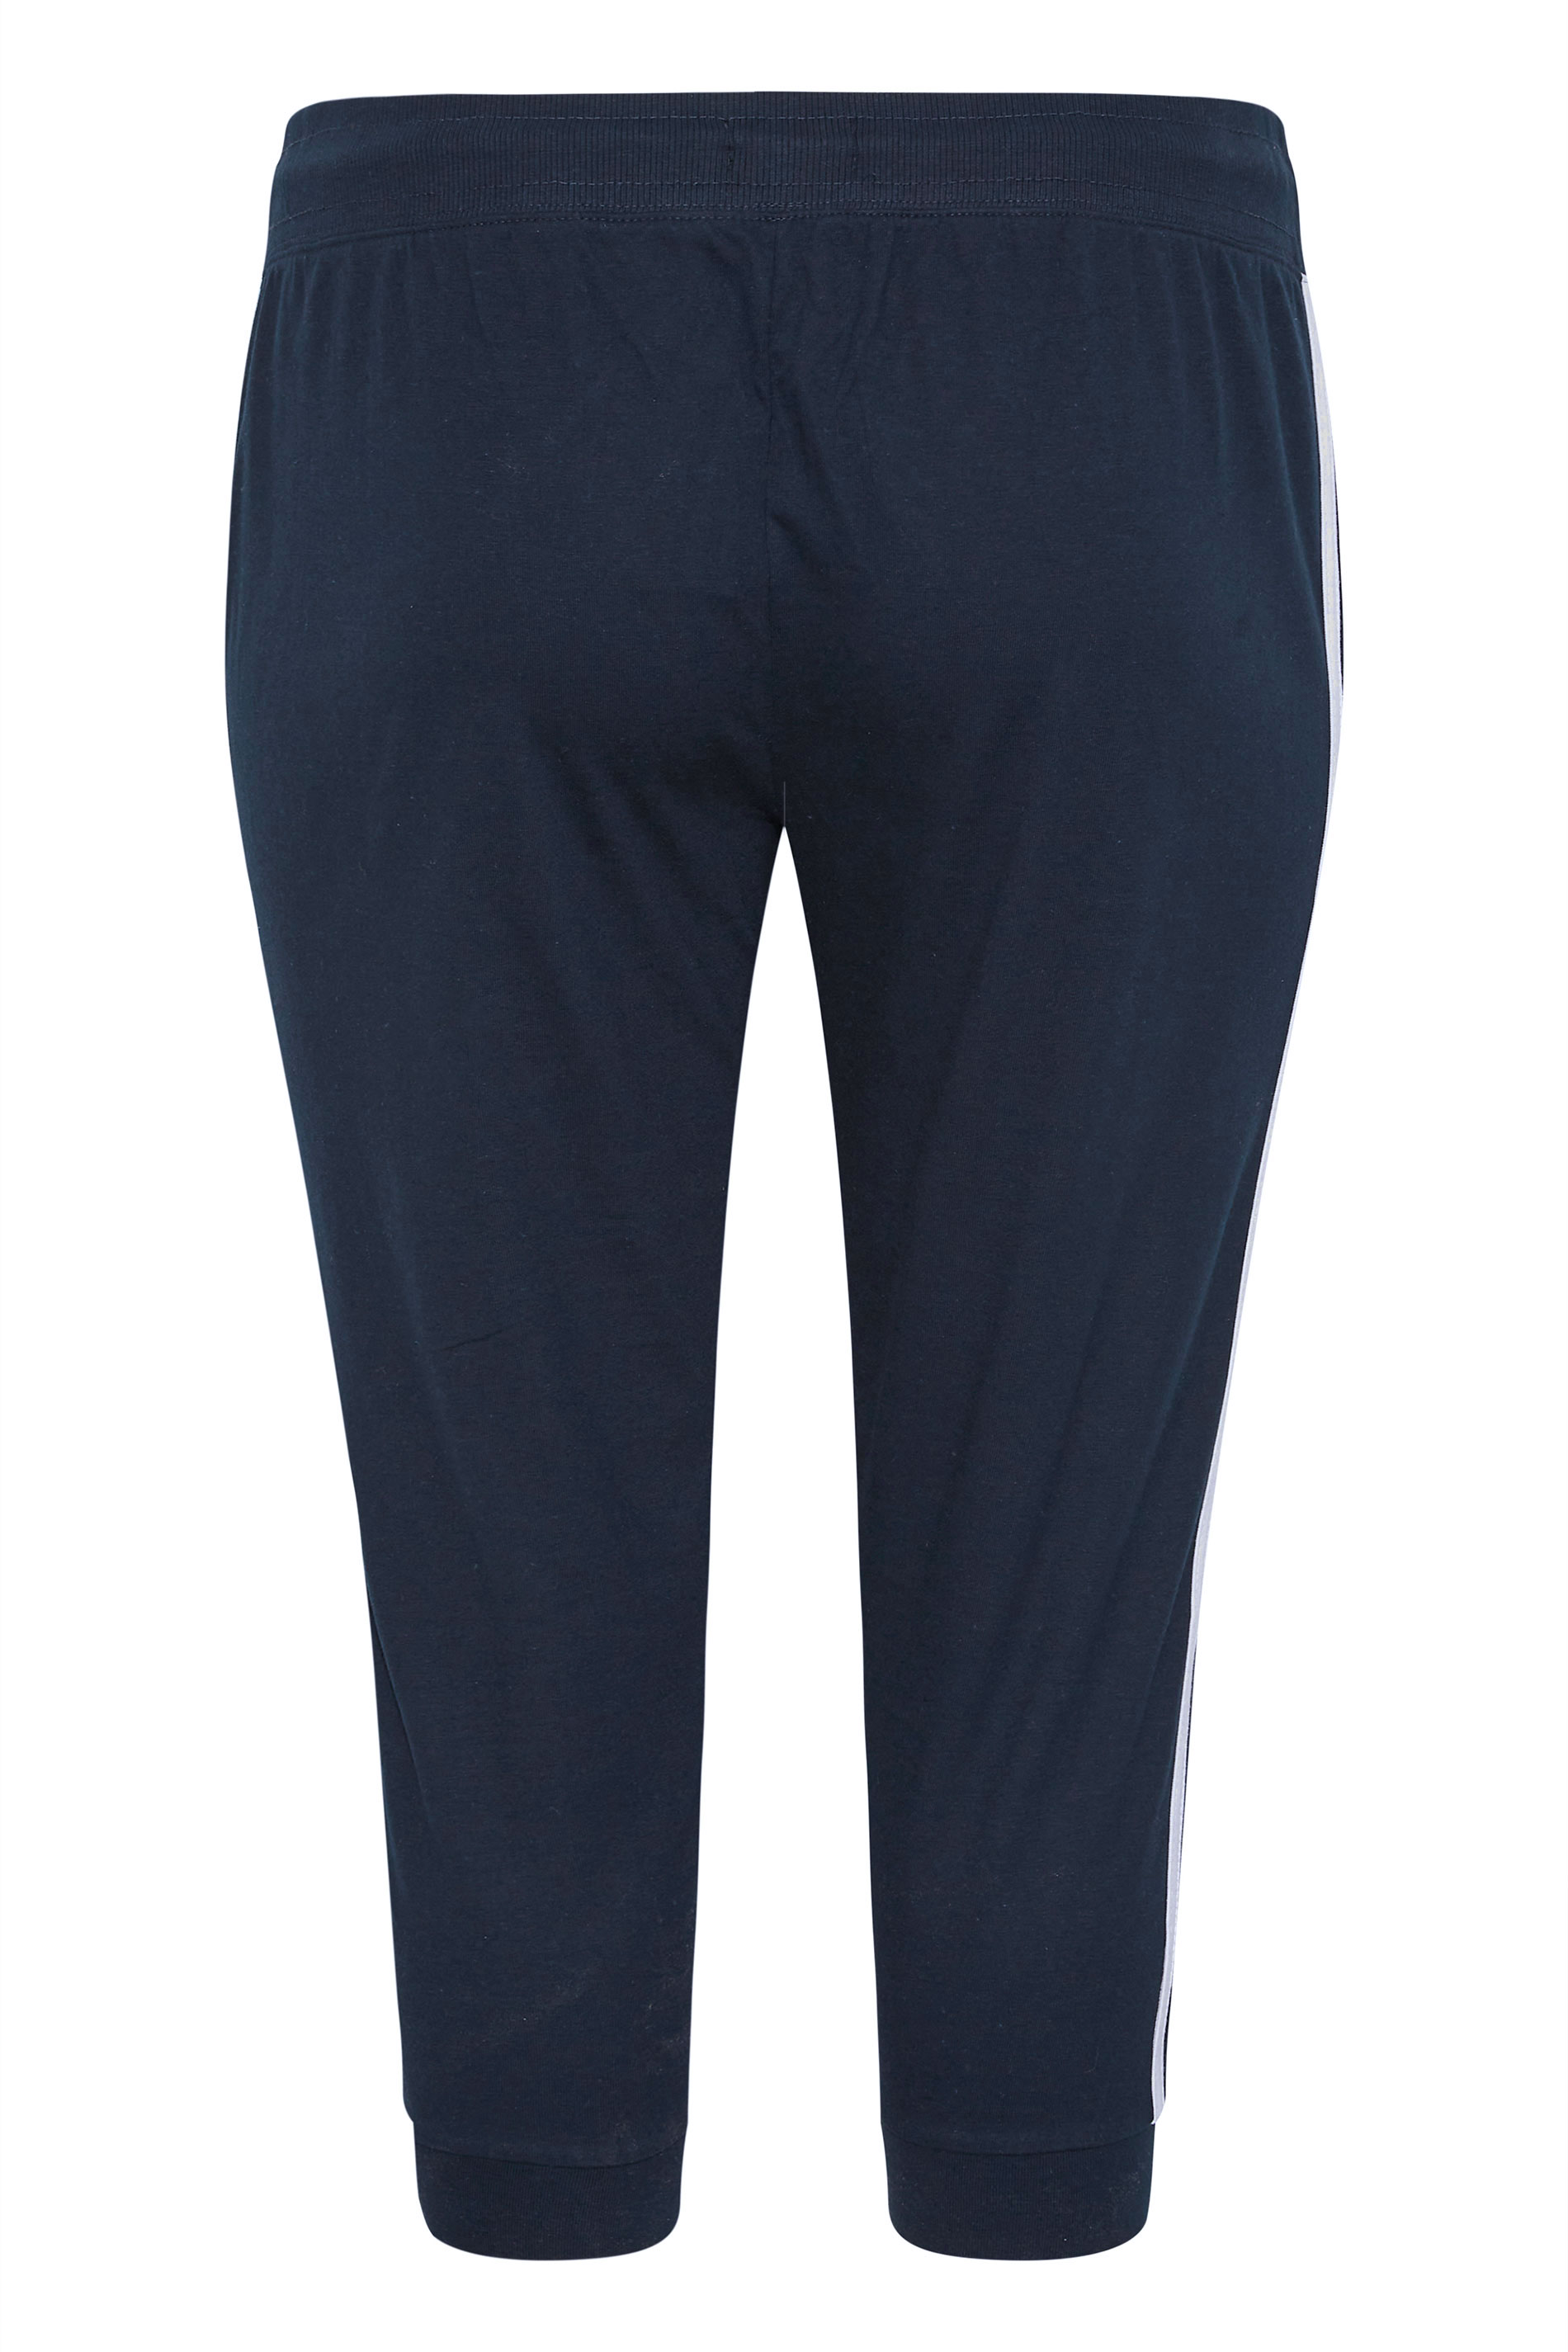 Grande taille  Pantalons Grande taille  Joggings | Jogging en Jersey Bleu Marine Bandes Blanches - CO82155